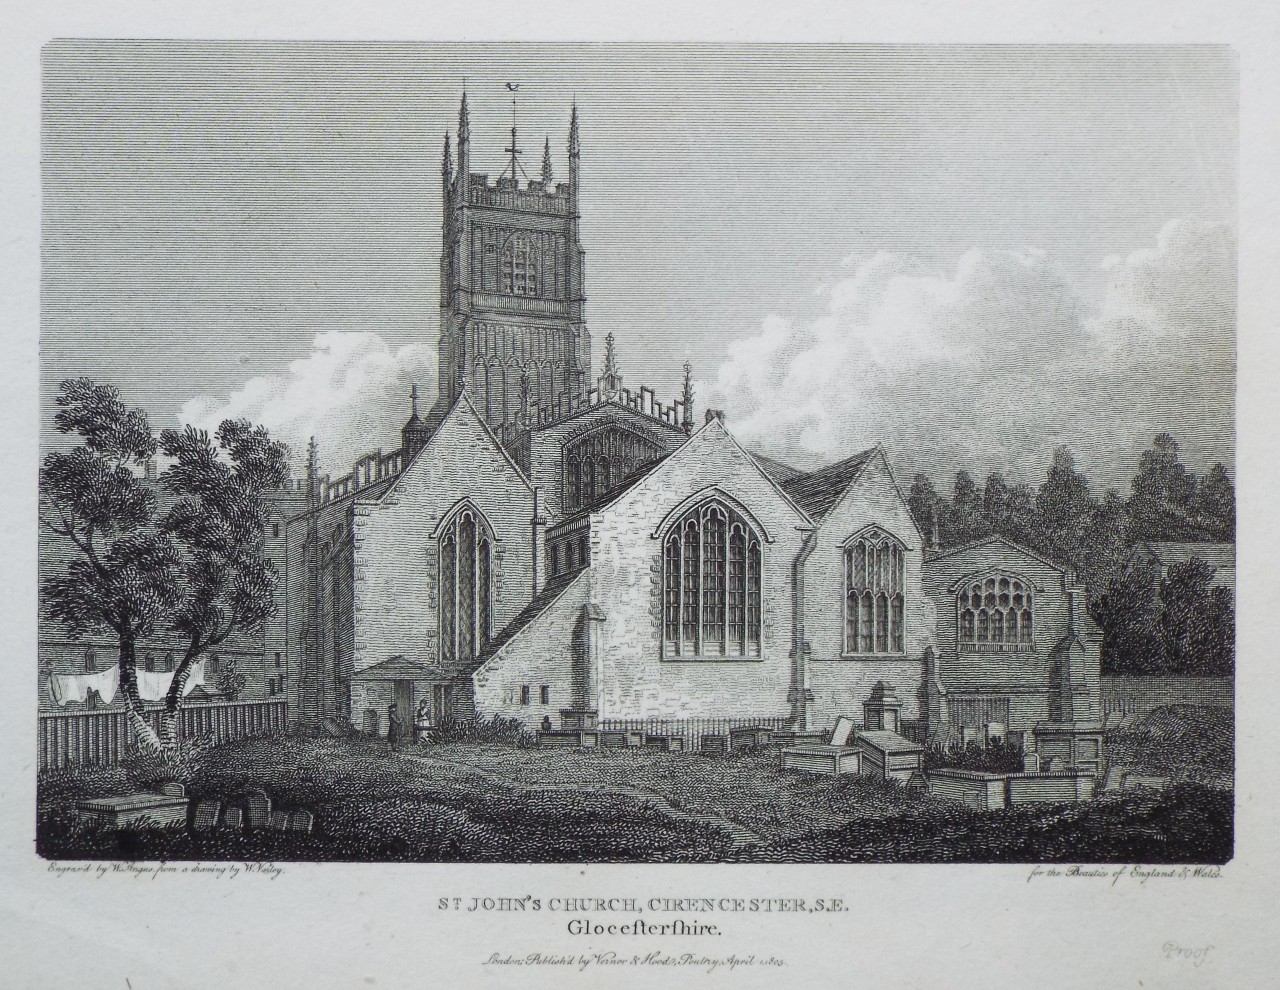 Print - St. John's Church, Cirencester, S.E. Glocestershire. - Angus